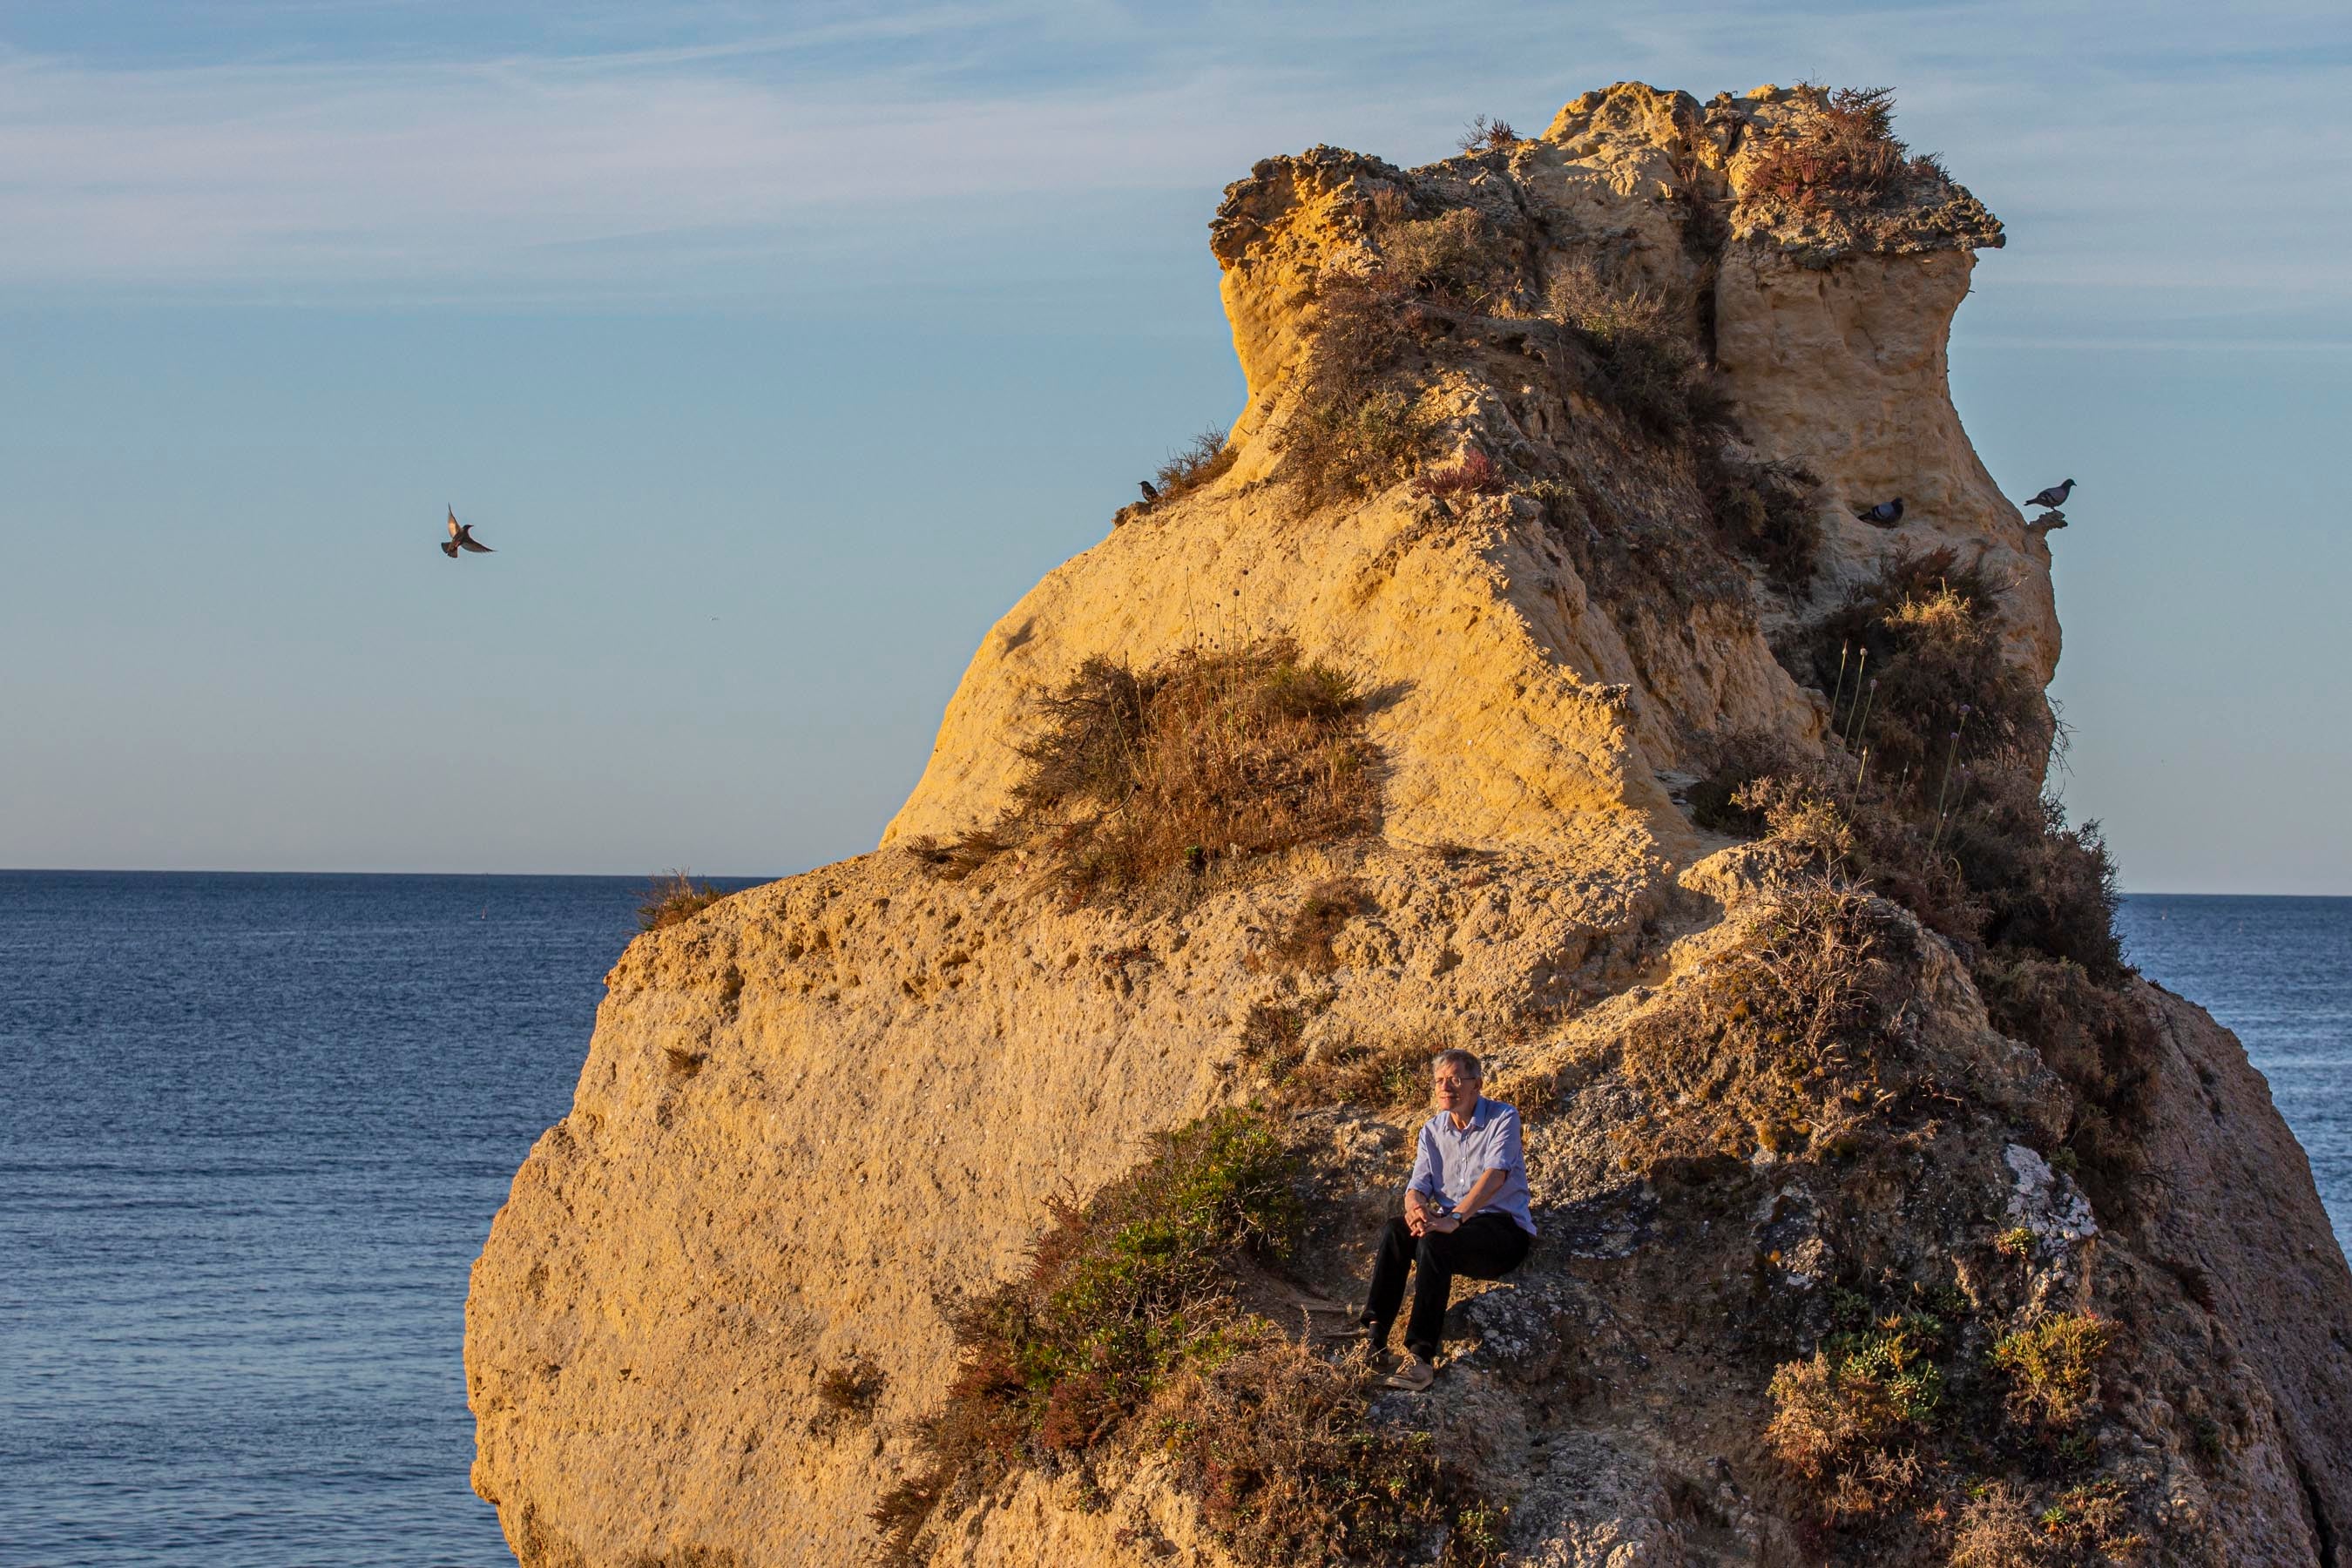 Distant dream: the Algarve coast of Portugal